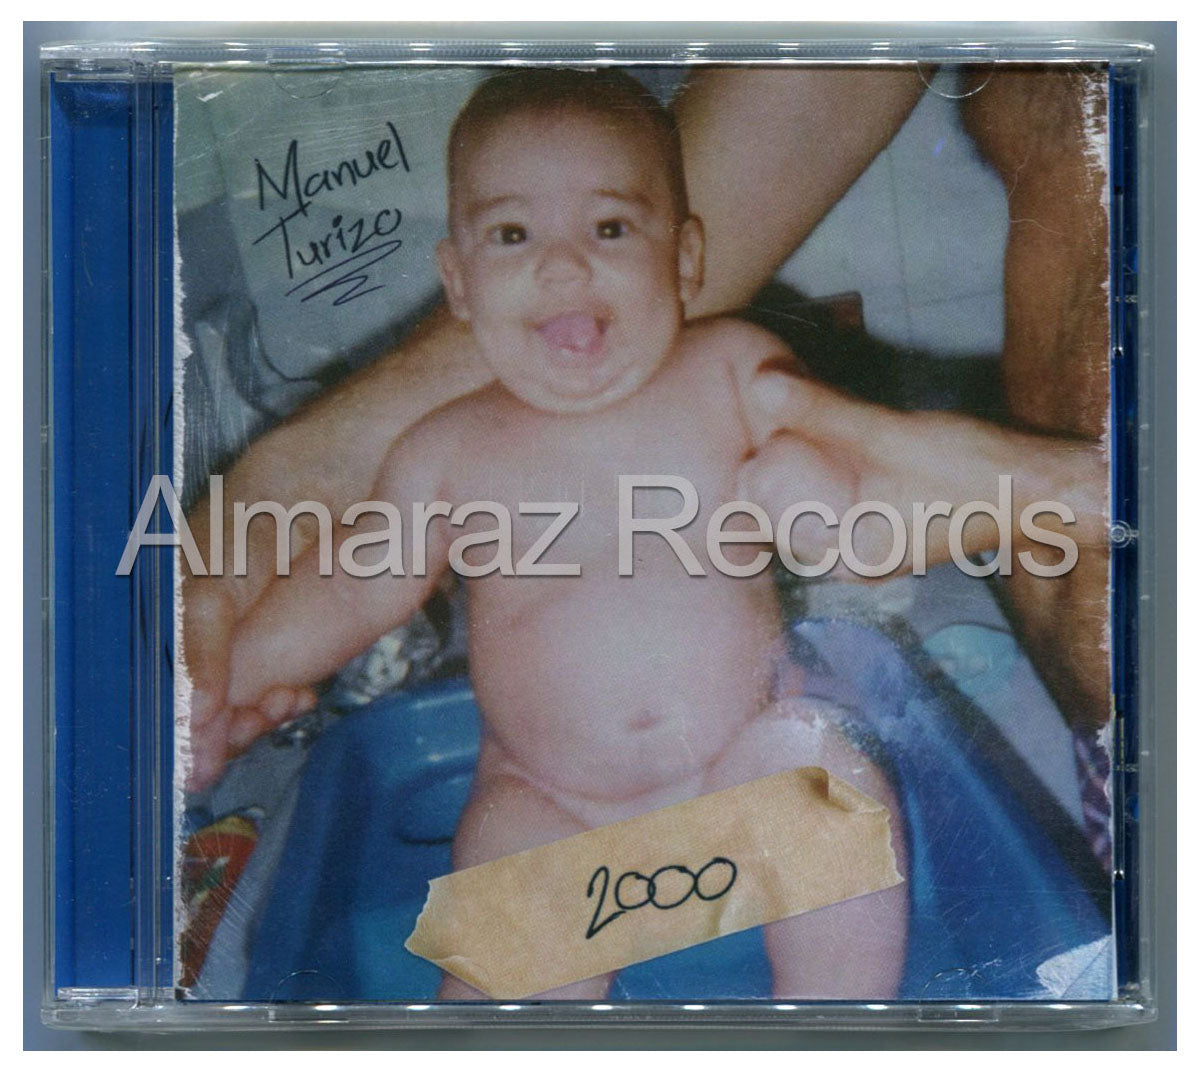 Manuel Turizo 2000 CD